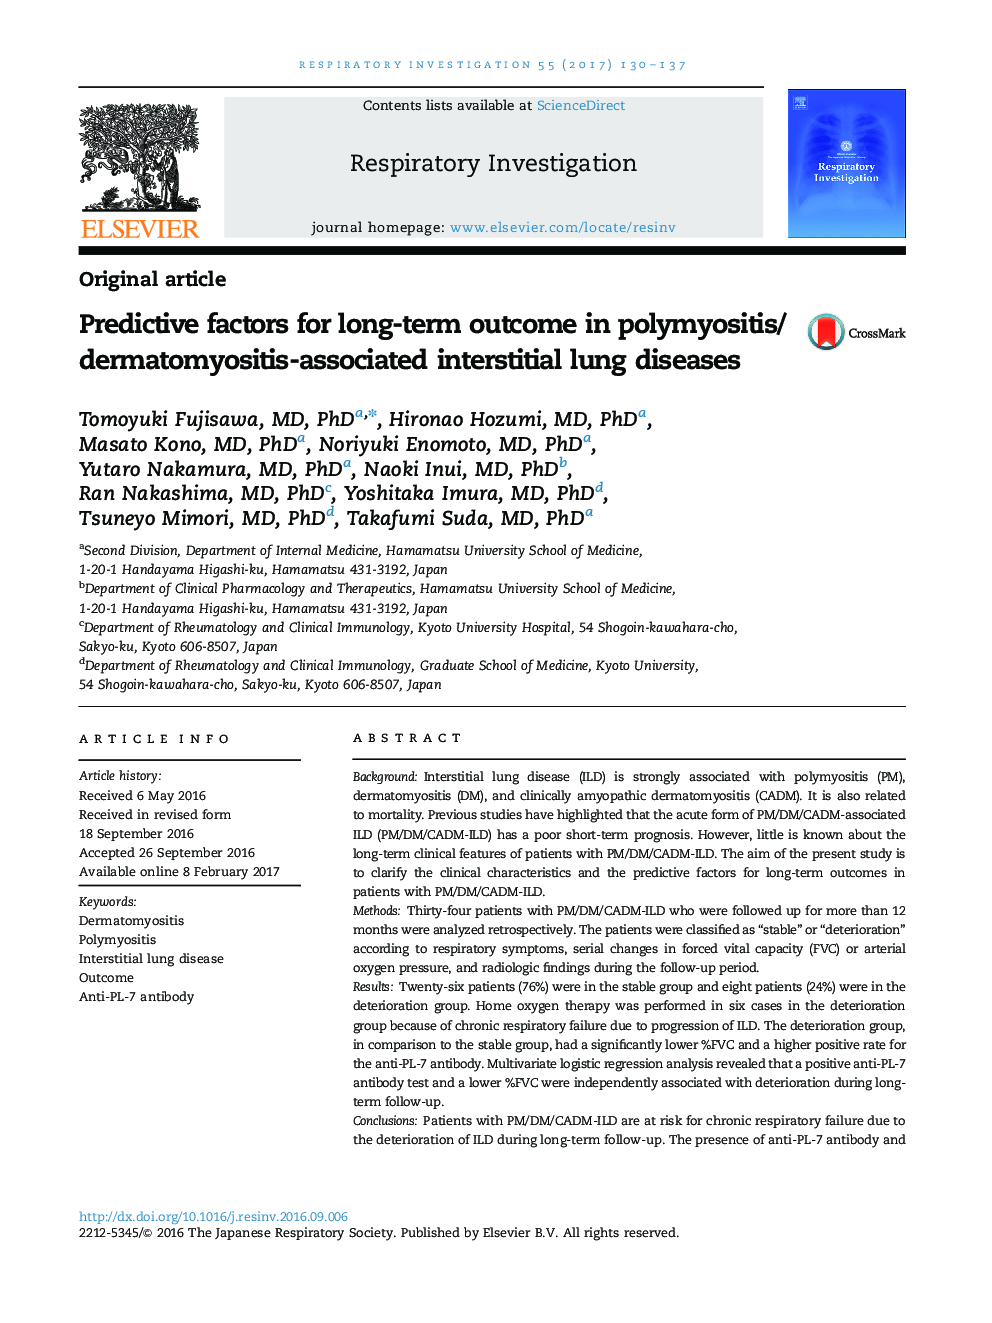 Predictive factors for long-term outcome in polymyositis/dermatomyositis-associated interstitial lung diseases